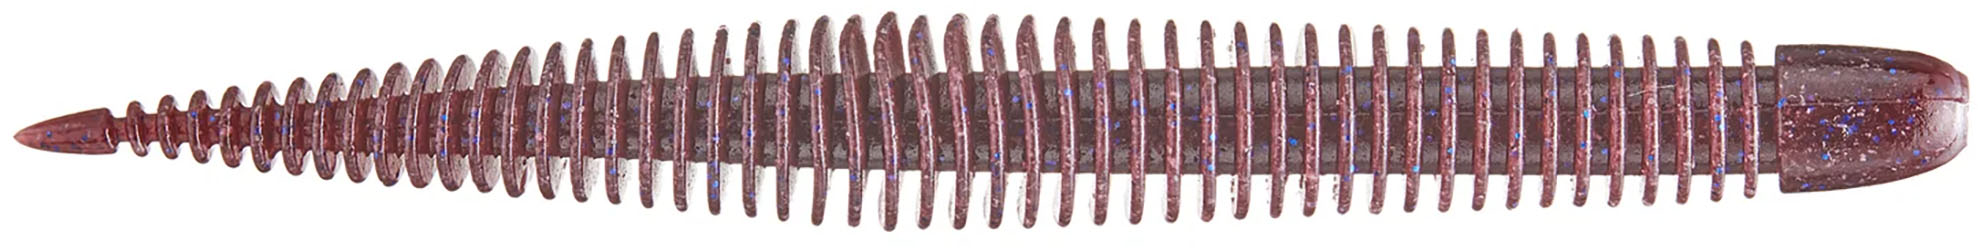 Geecrack Bellows Stick Worm - 8 Inch